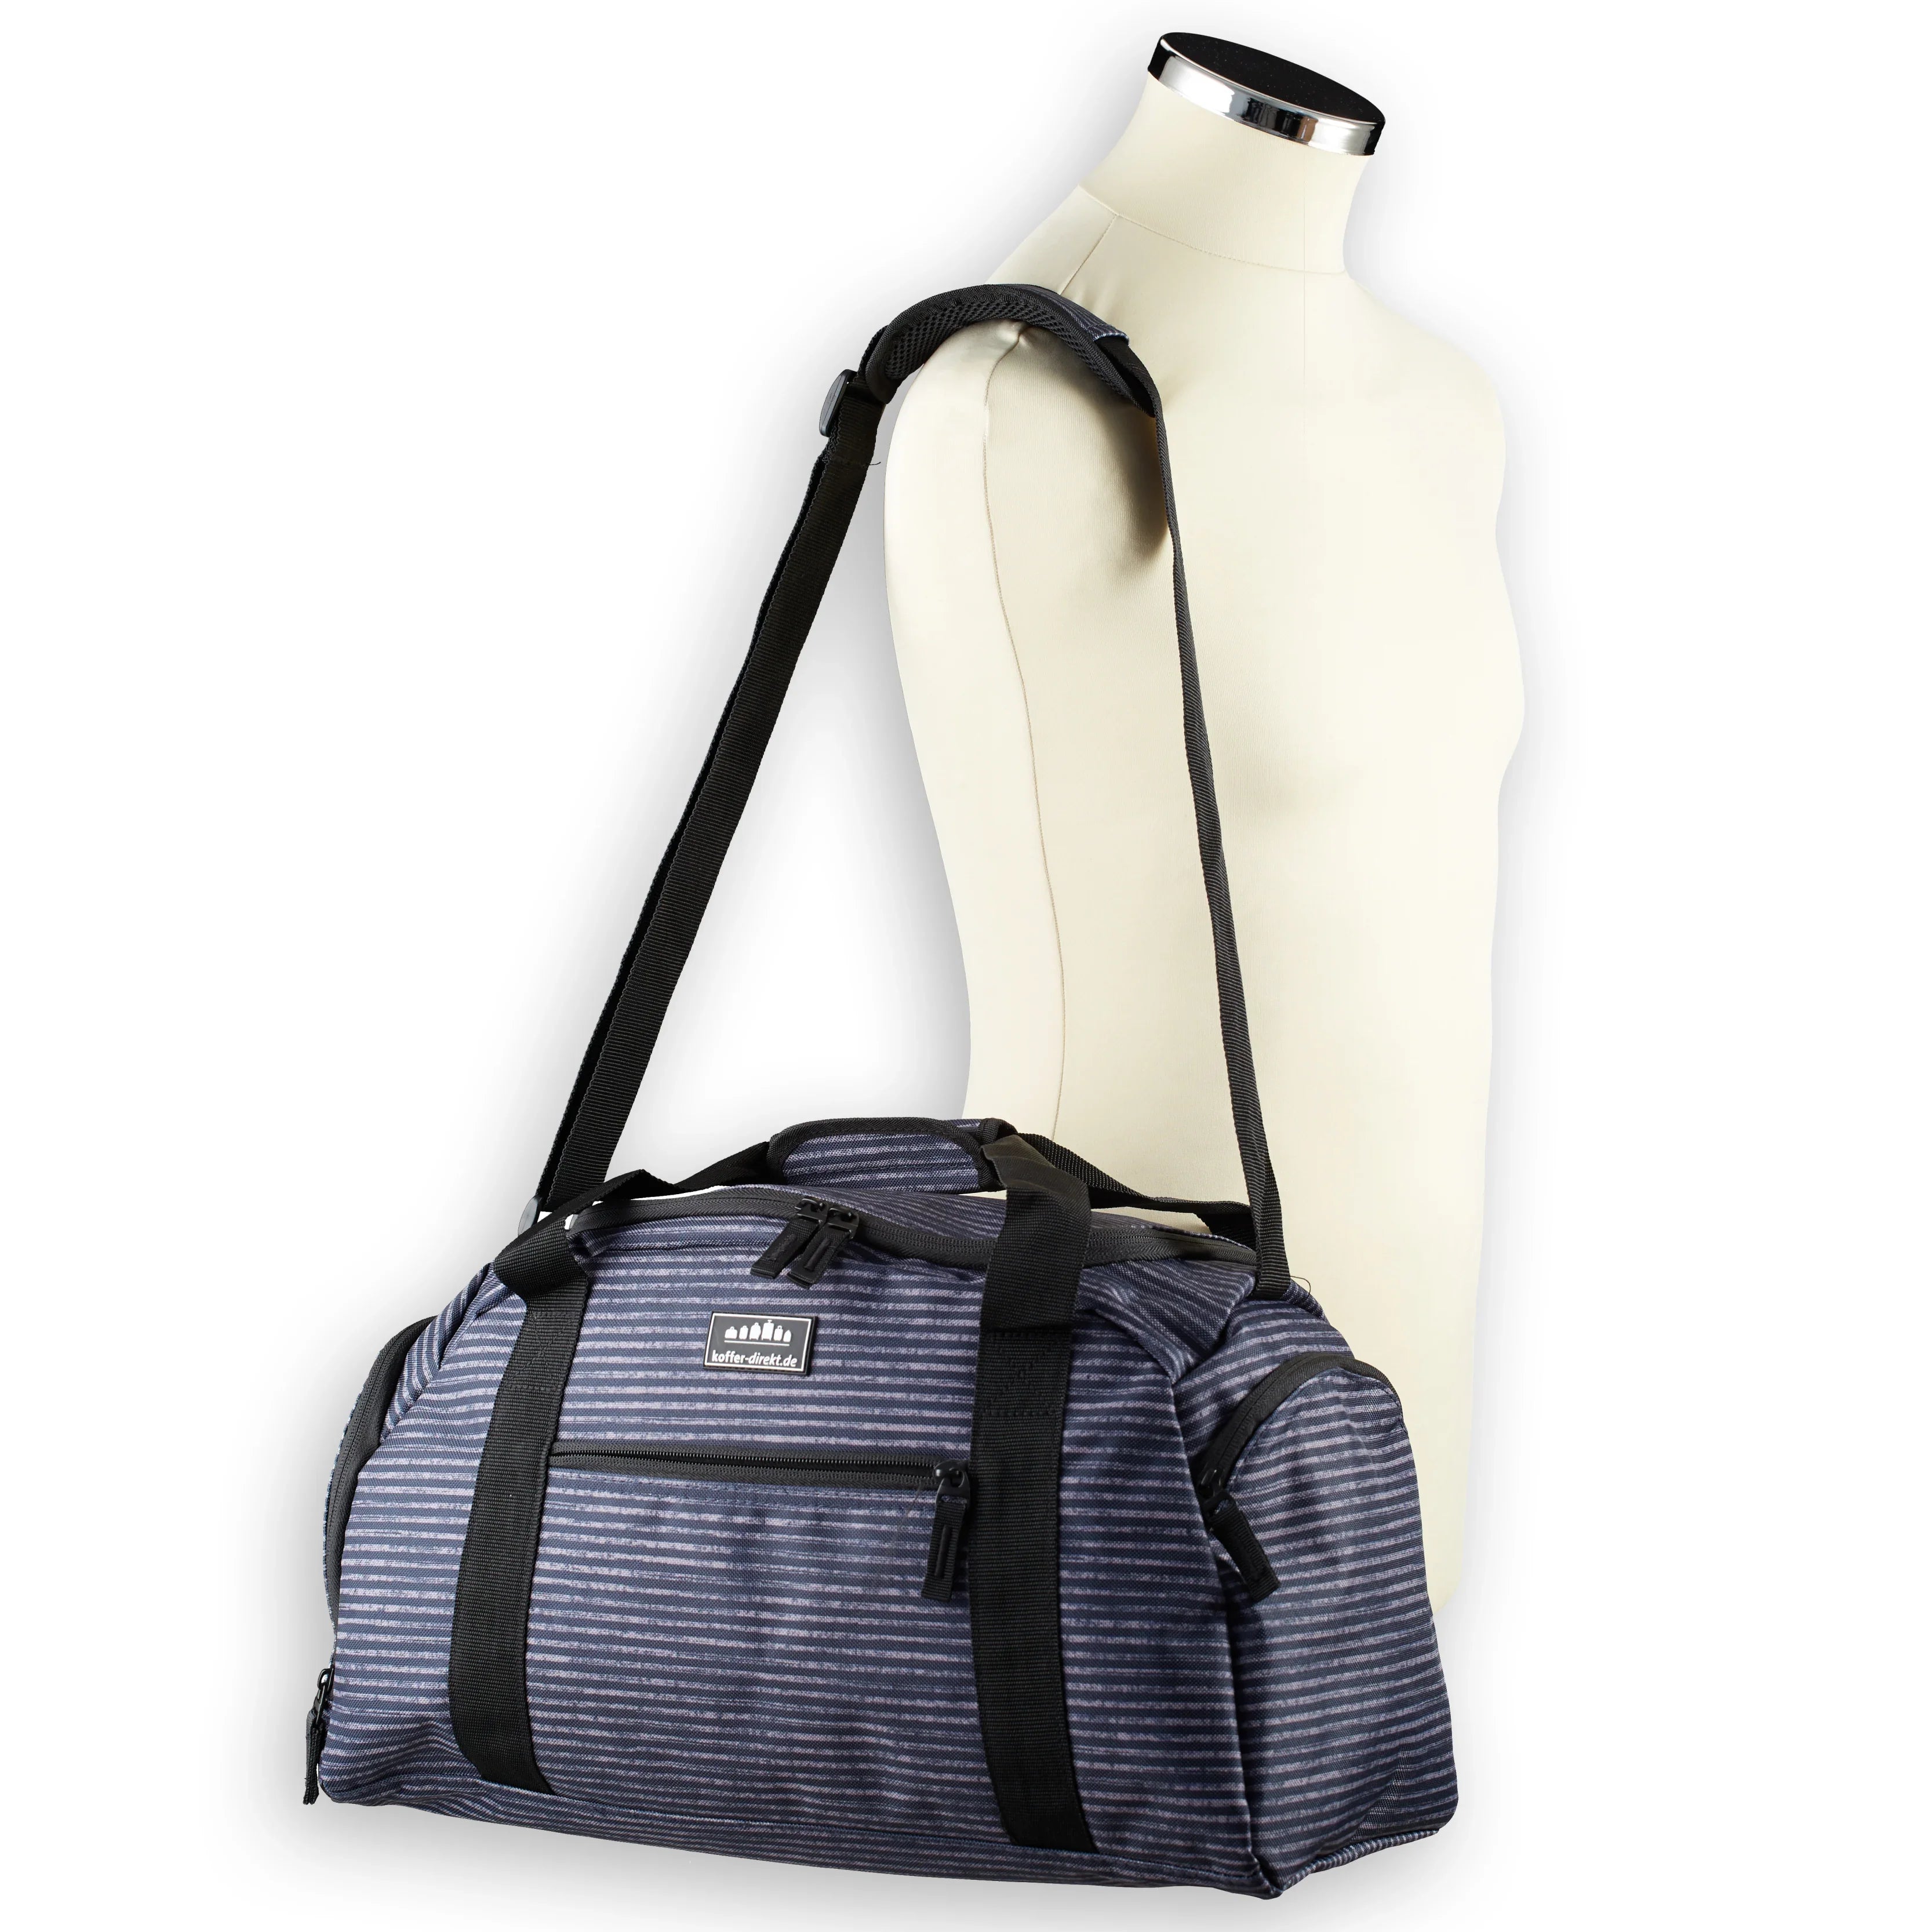 koffer-direkt.de Two Travel II Travel bag 46 cm - blue stripe